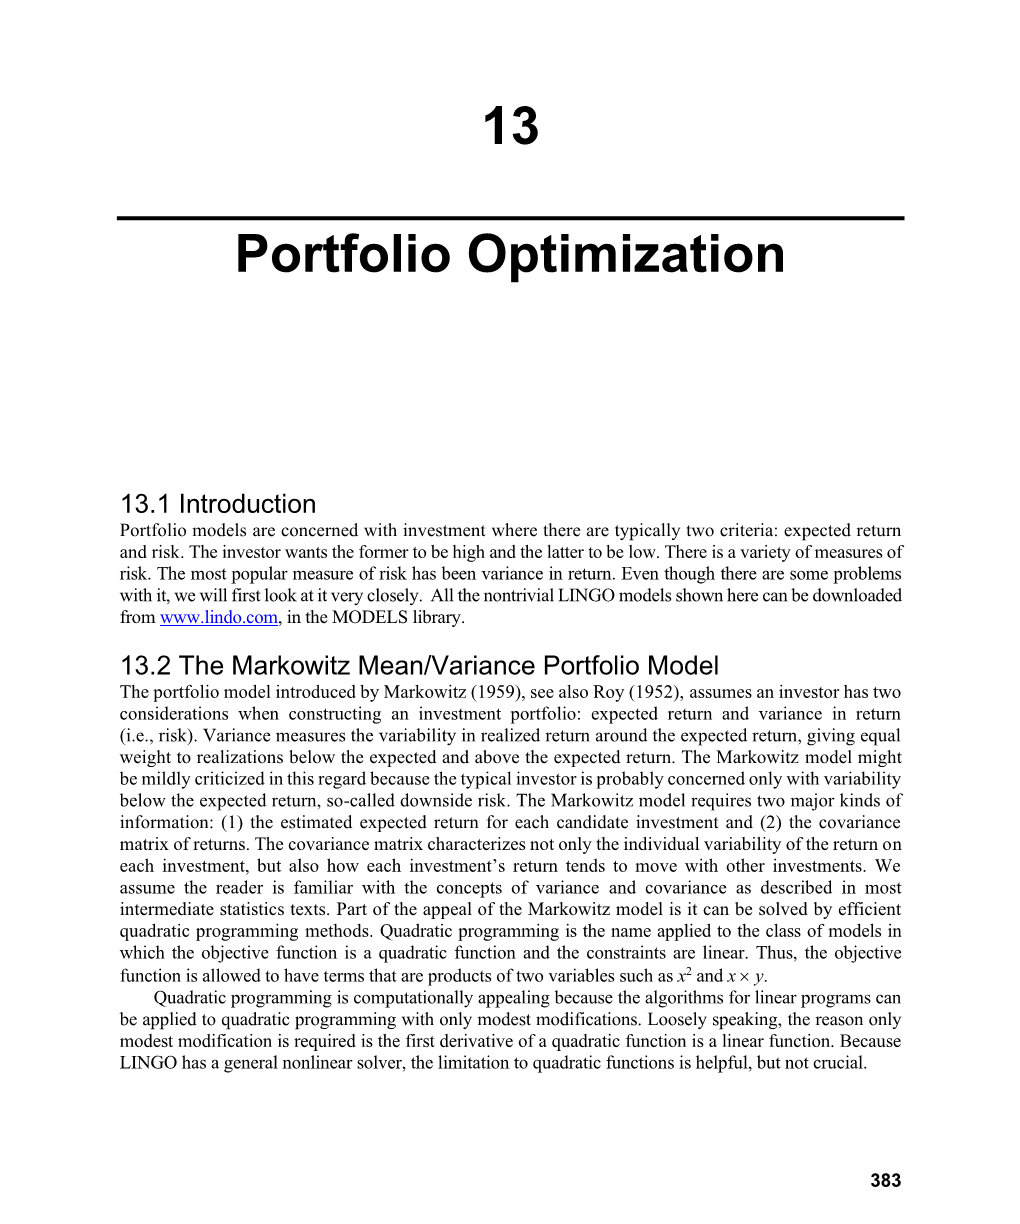 Chapter 13 Portfolio Optimization